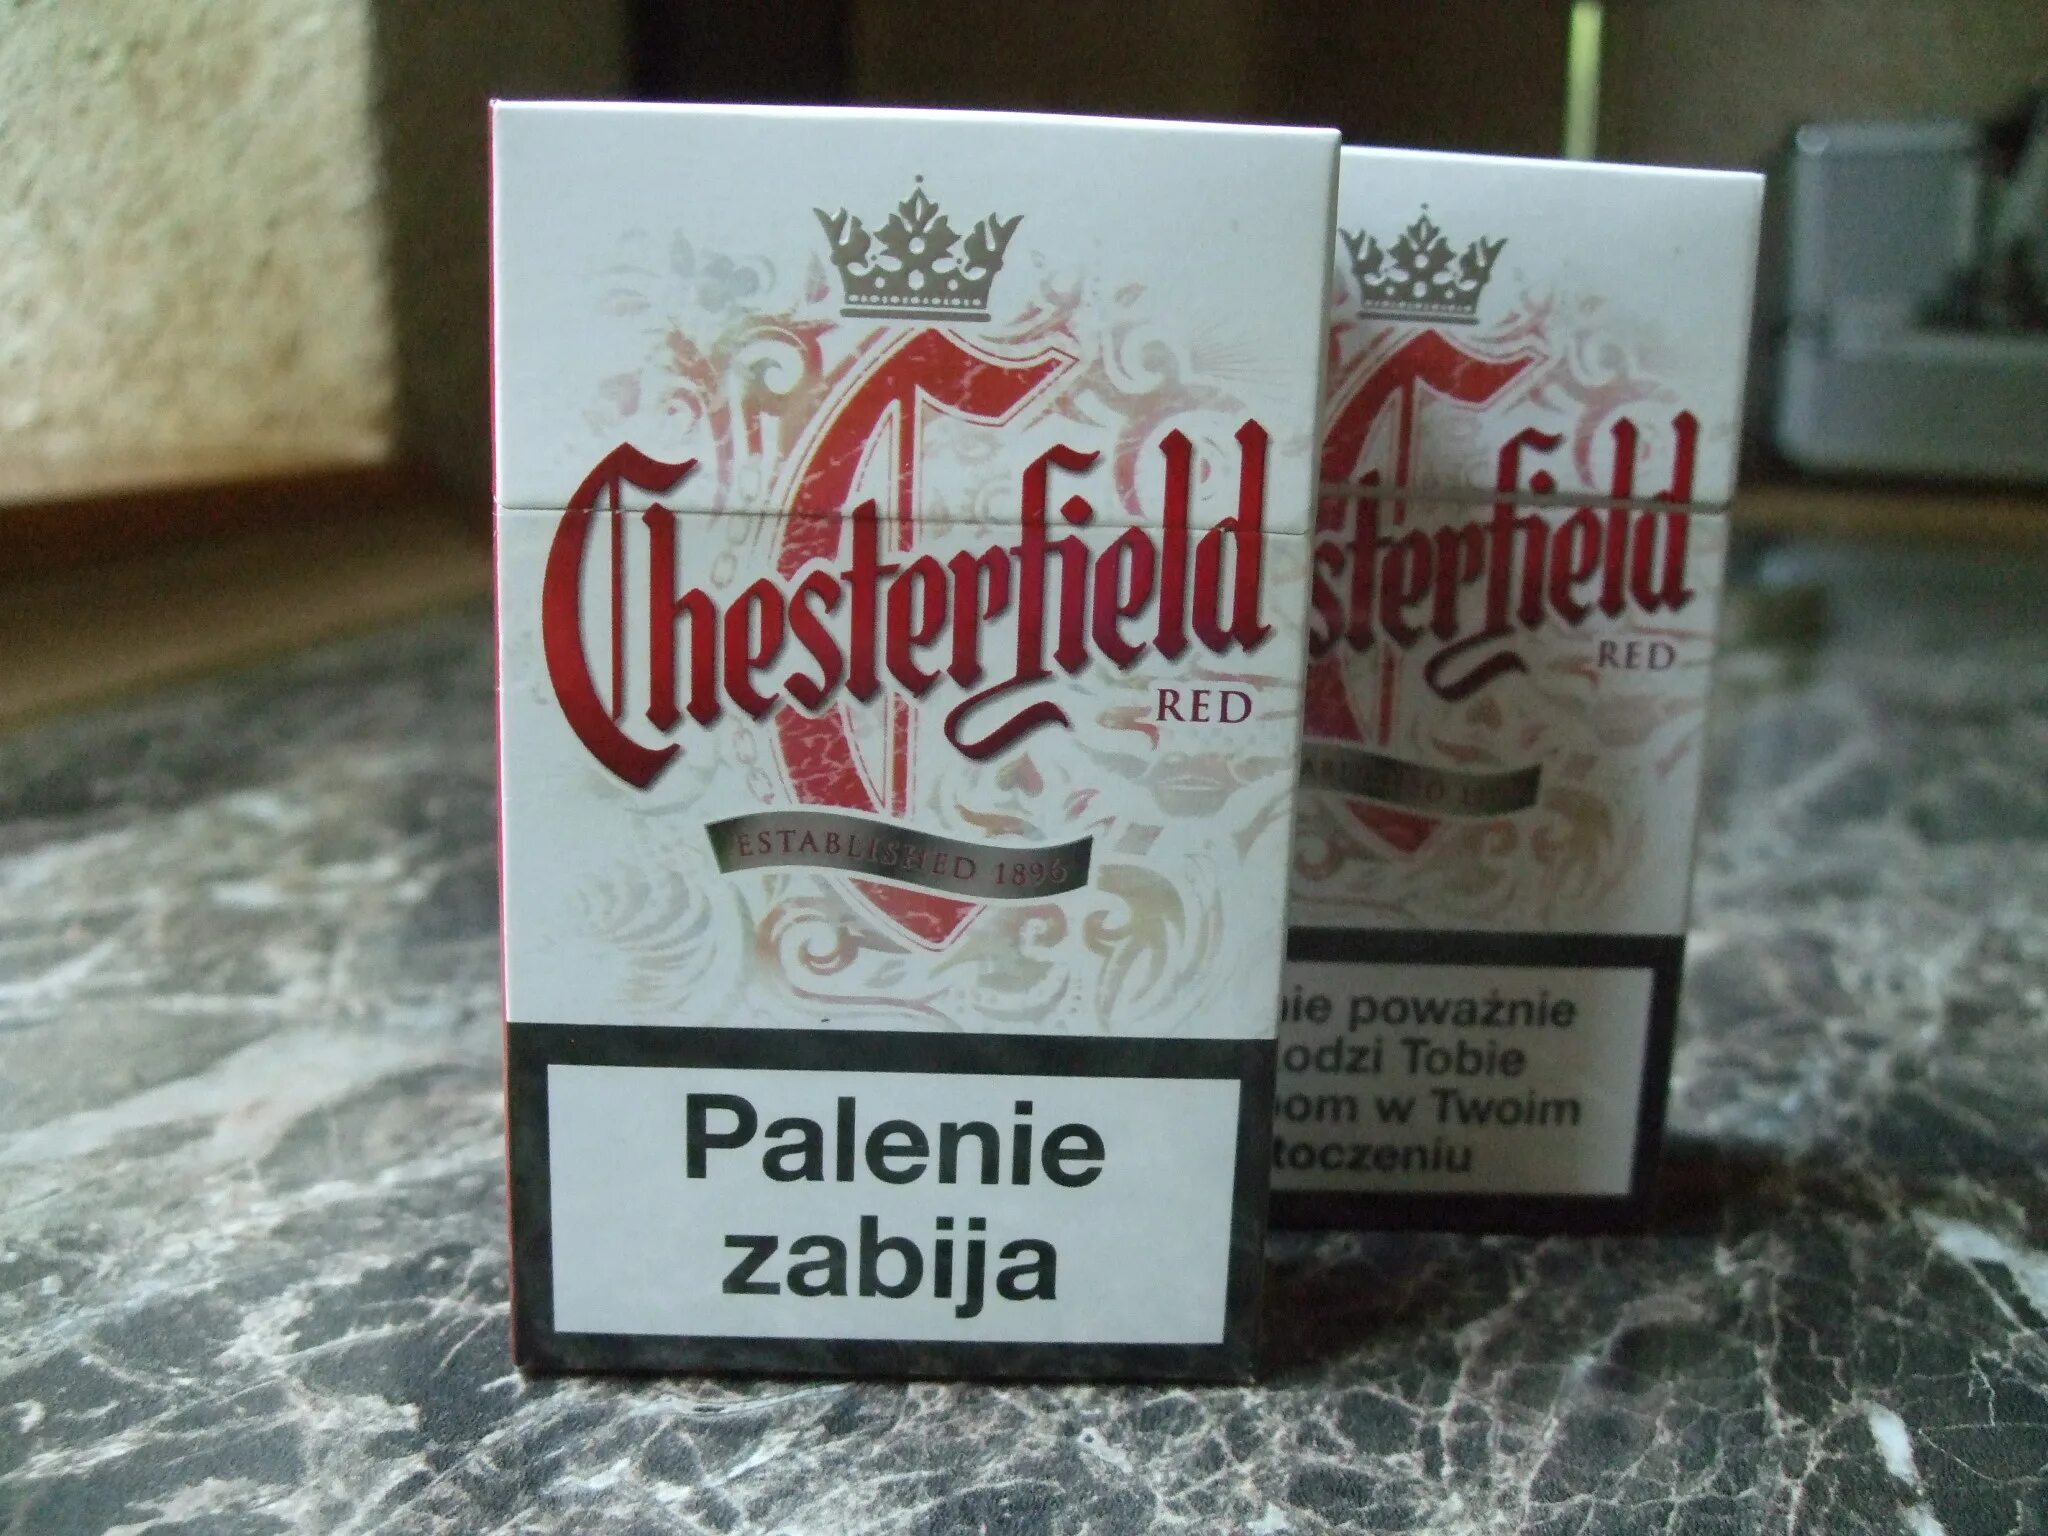 Честерфилд цена за пачку. Сигареты Честерфилд компакт. Сигареты Честер компакт красный. Сигареты Честер Честерфилд. Chesterfield Compact красный.